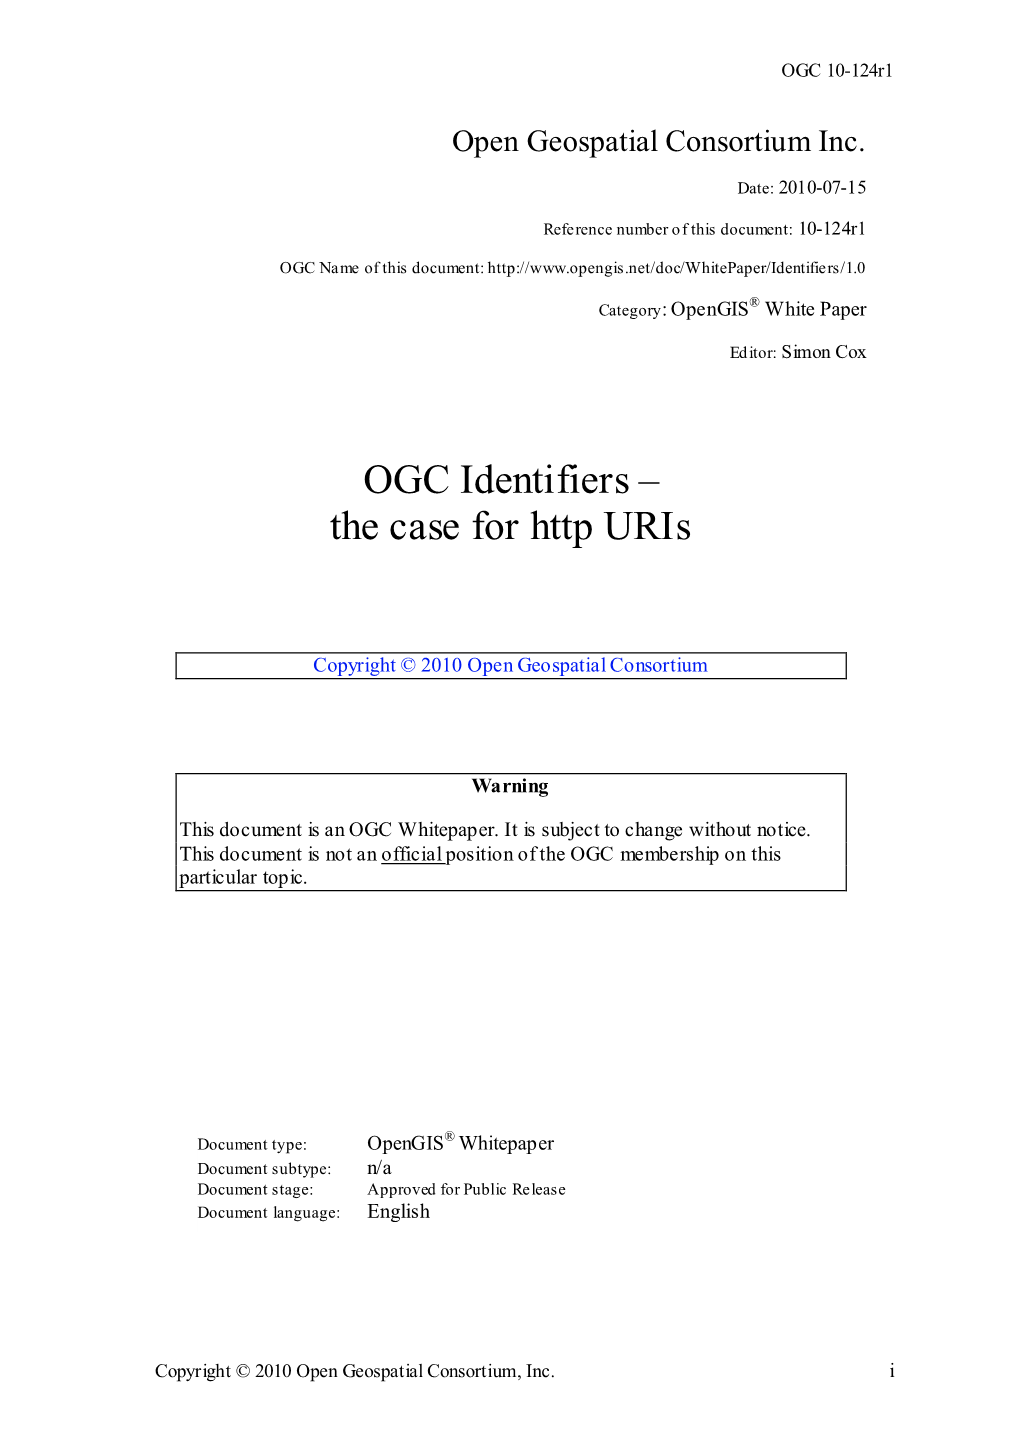 OGC Identifiers –